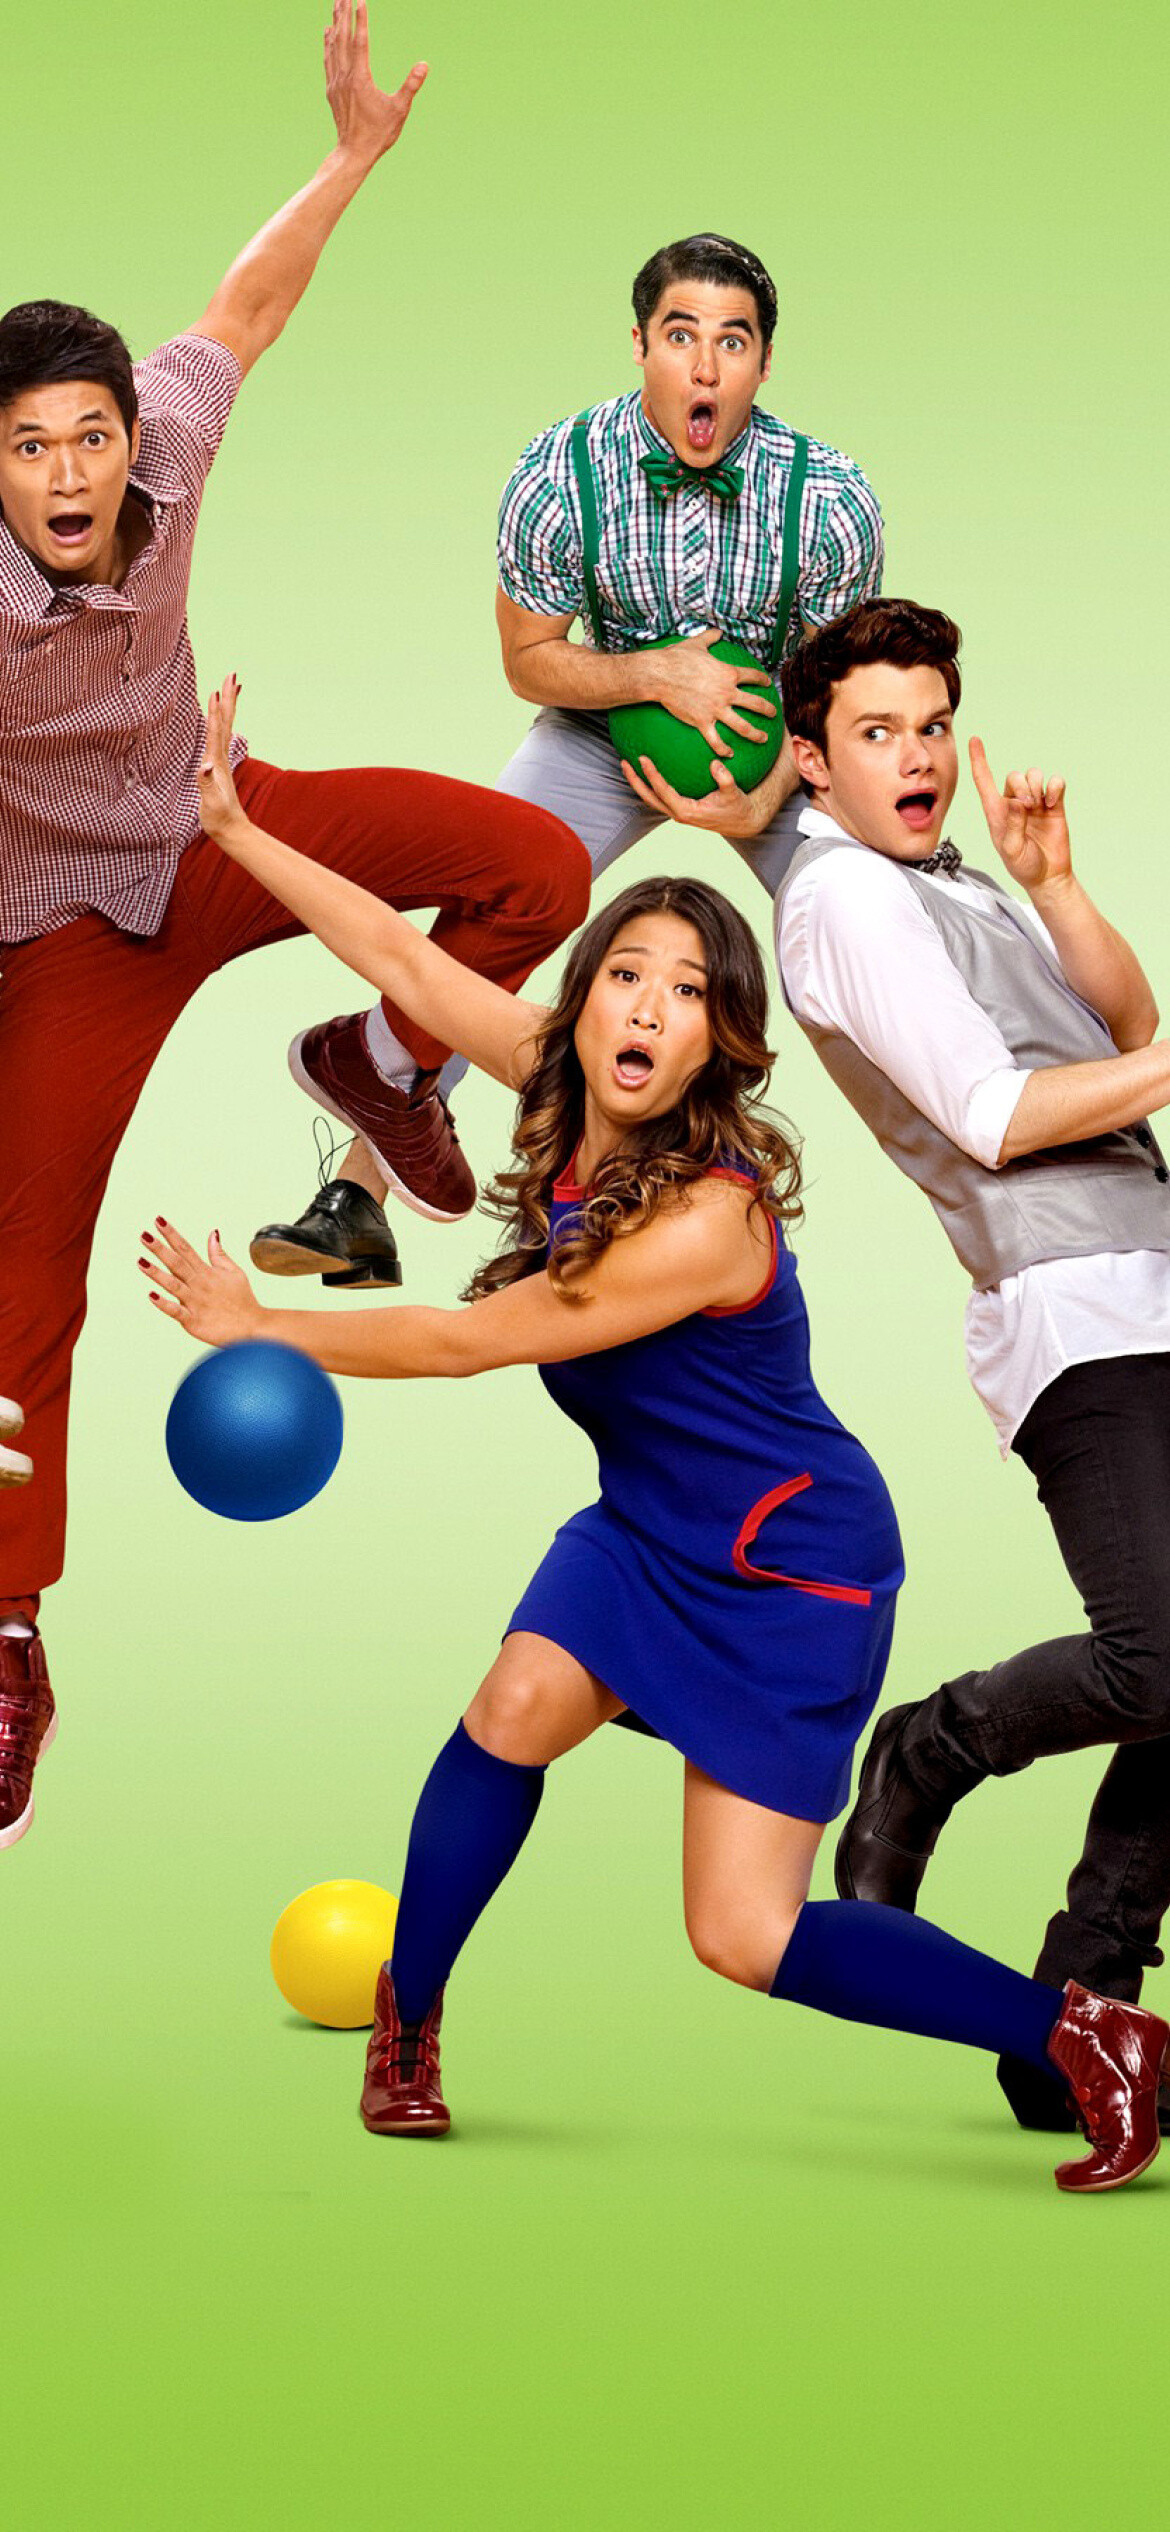 Glee (TV series): A musical comedy-drama show created by Ryan Murphy, Brad Falchuk, and Ian Brennan. 1170x2540 HD Wallpaper.